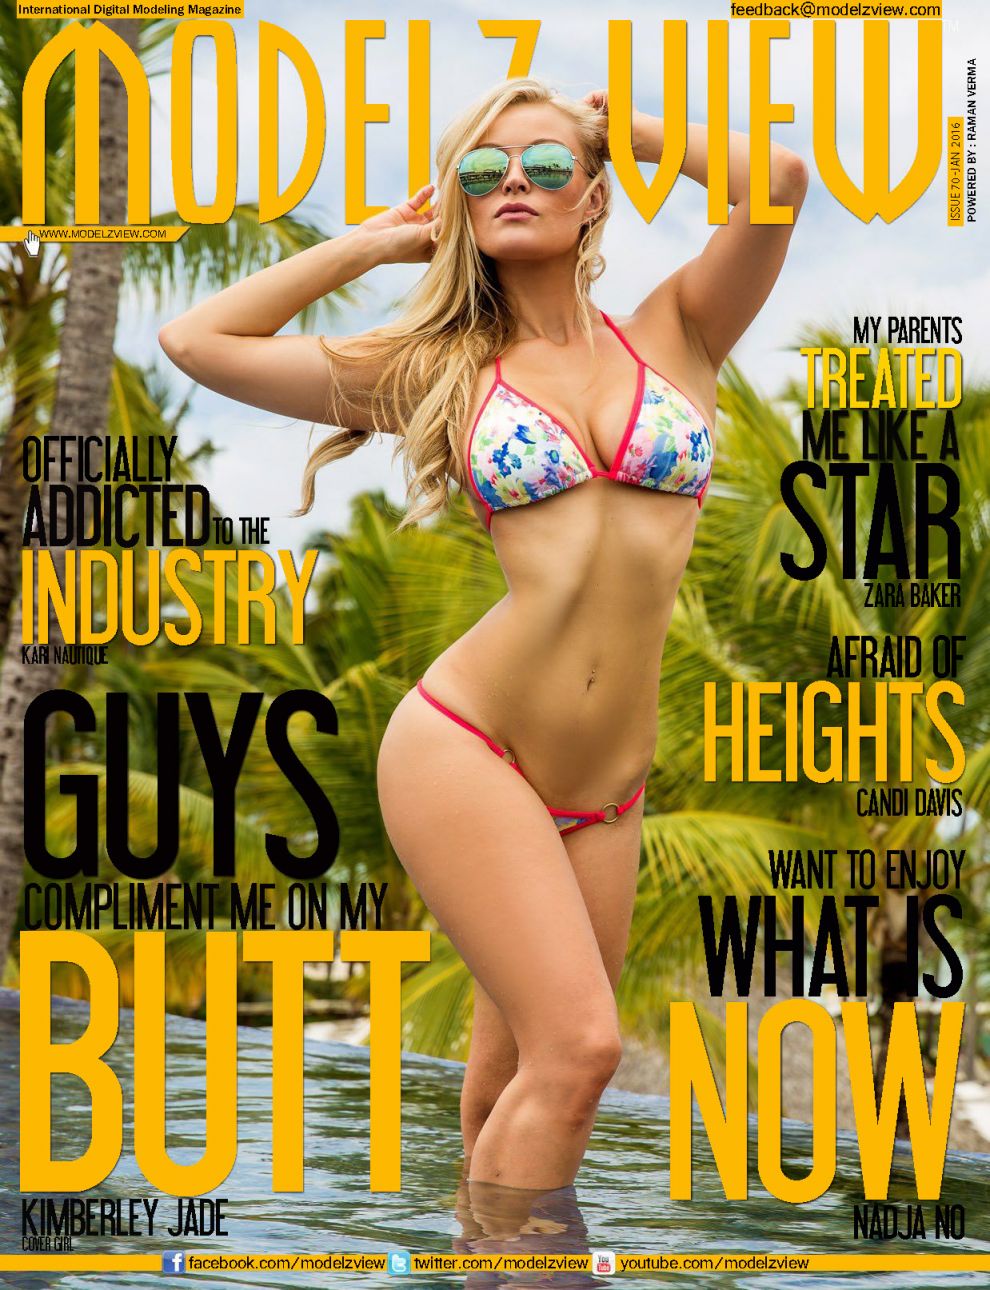 Kimberley Jade for Modelz View Magazine